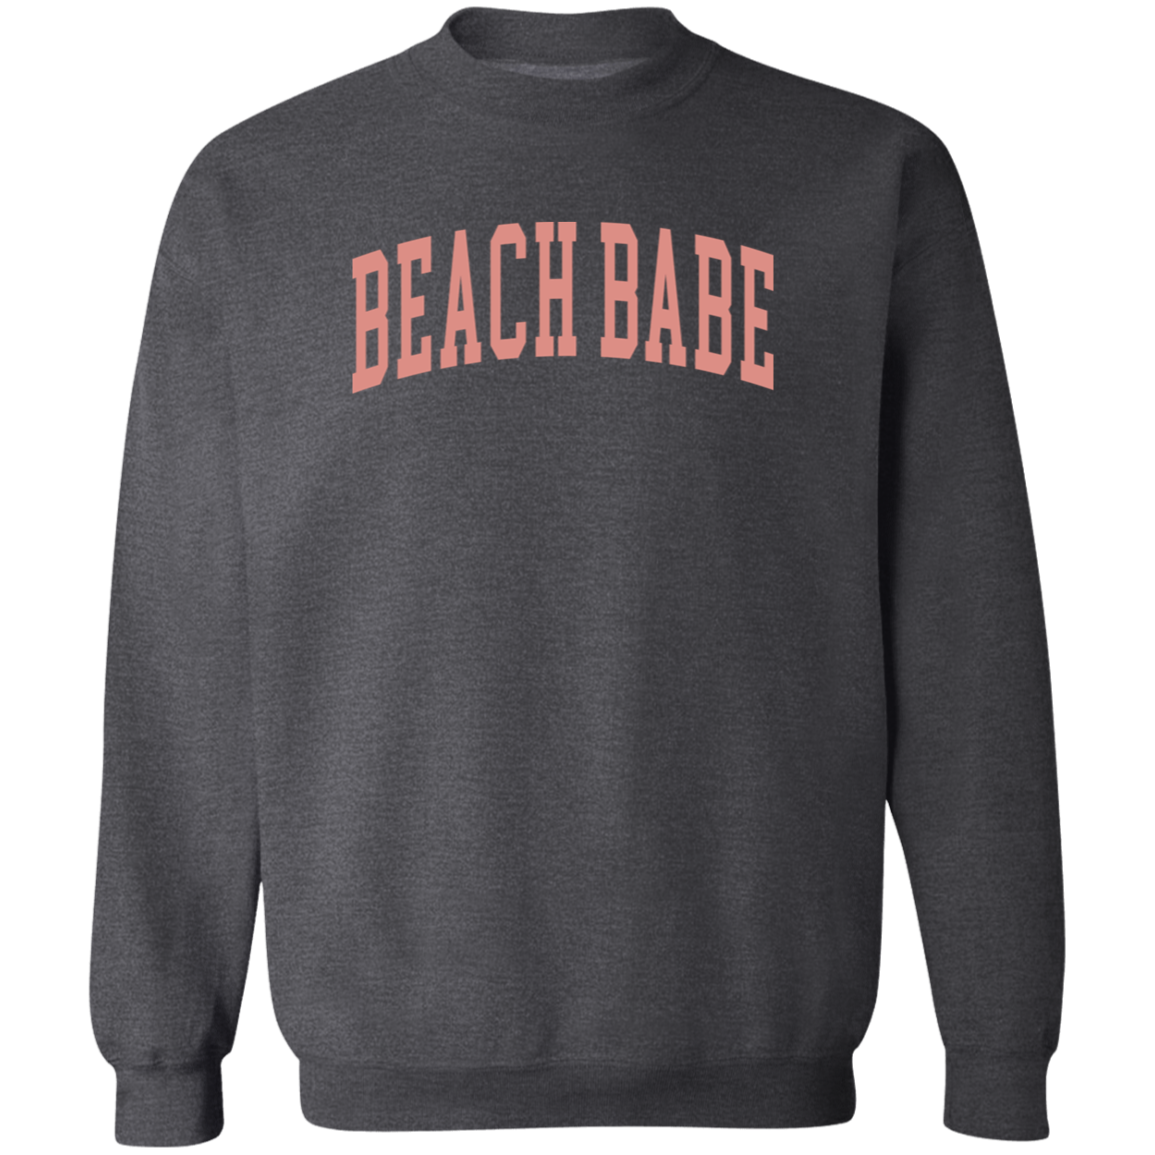 Beach Babe Varsity Sweatshirt